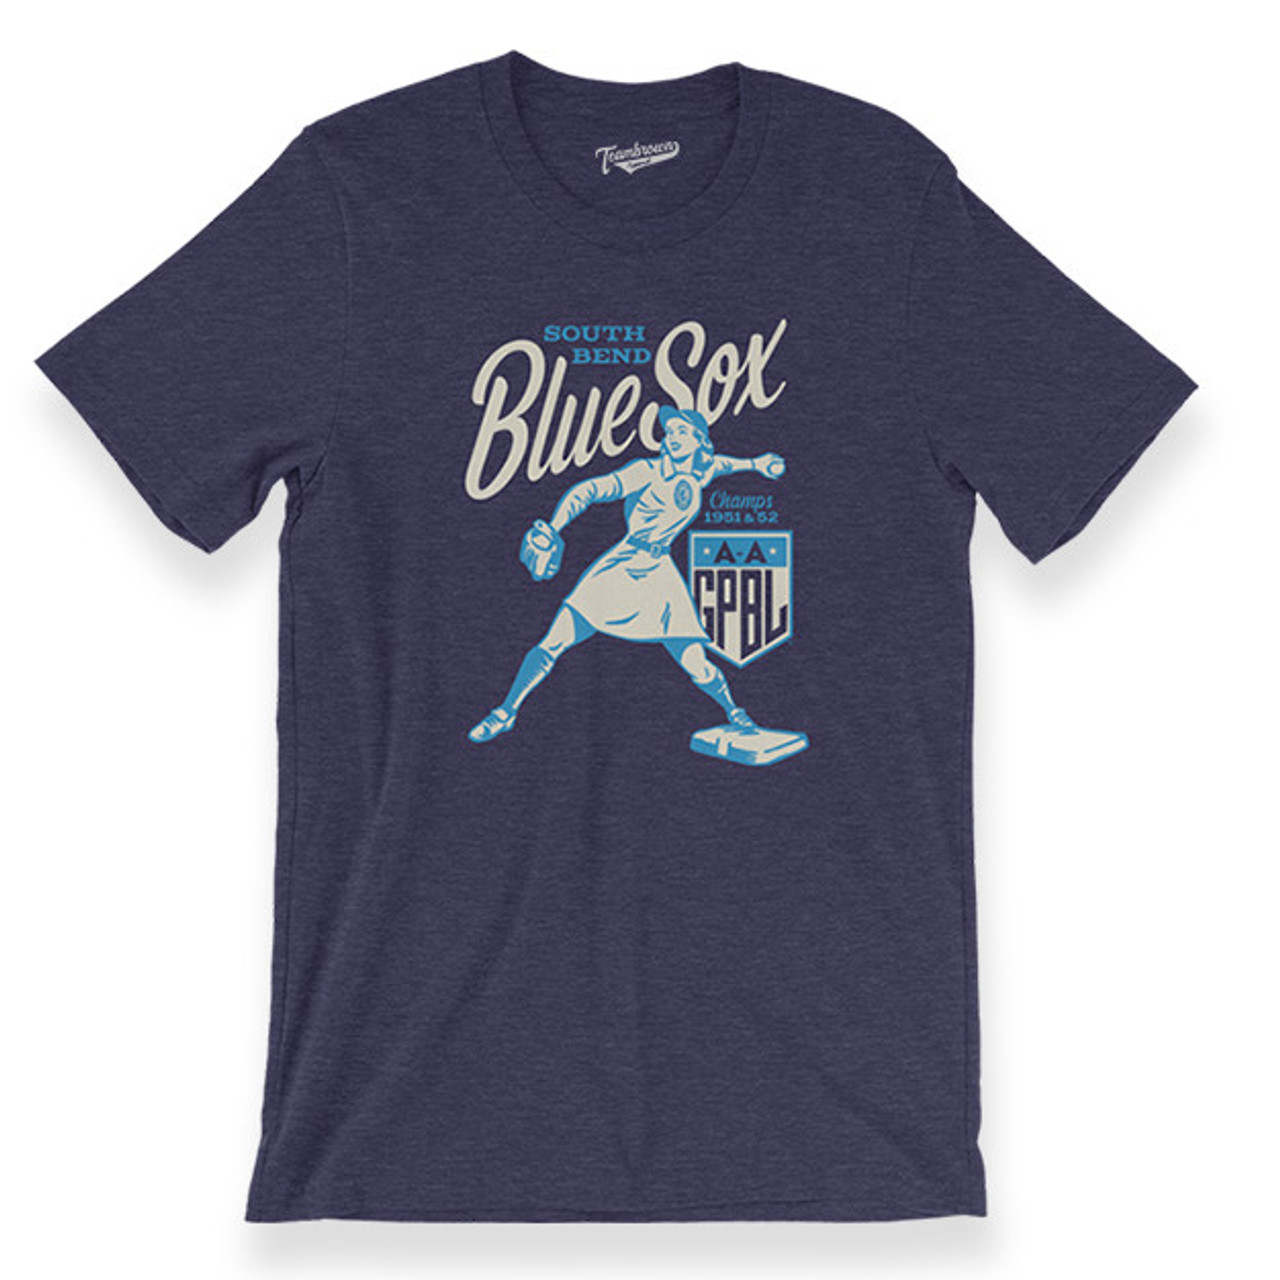 Unisex Teambrown South Bend Blue Sox AAGPBL Baseball Shirt